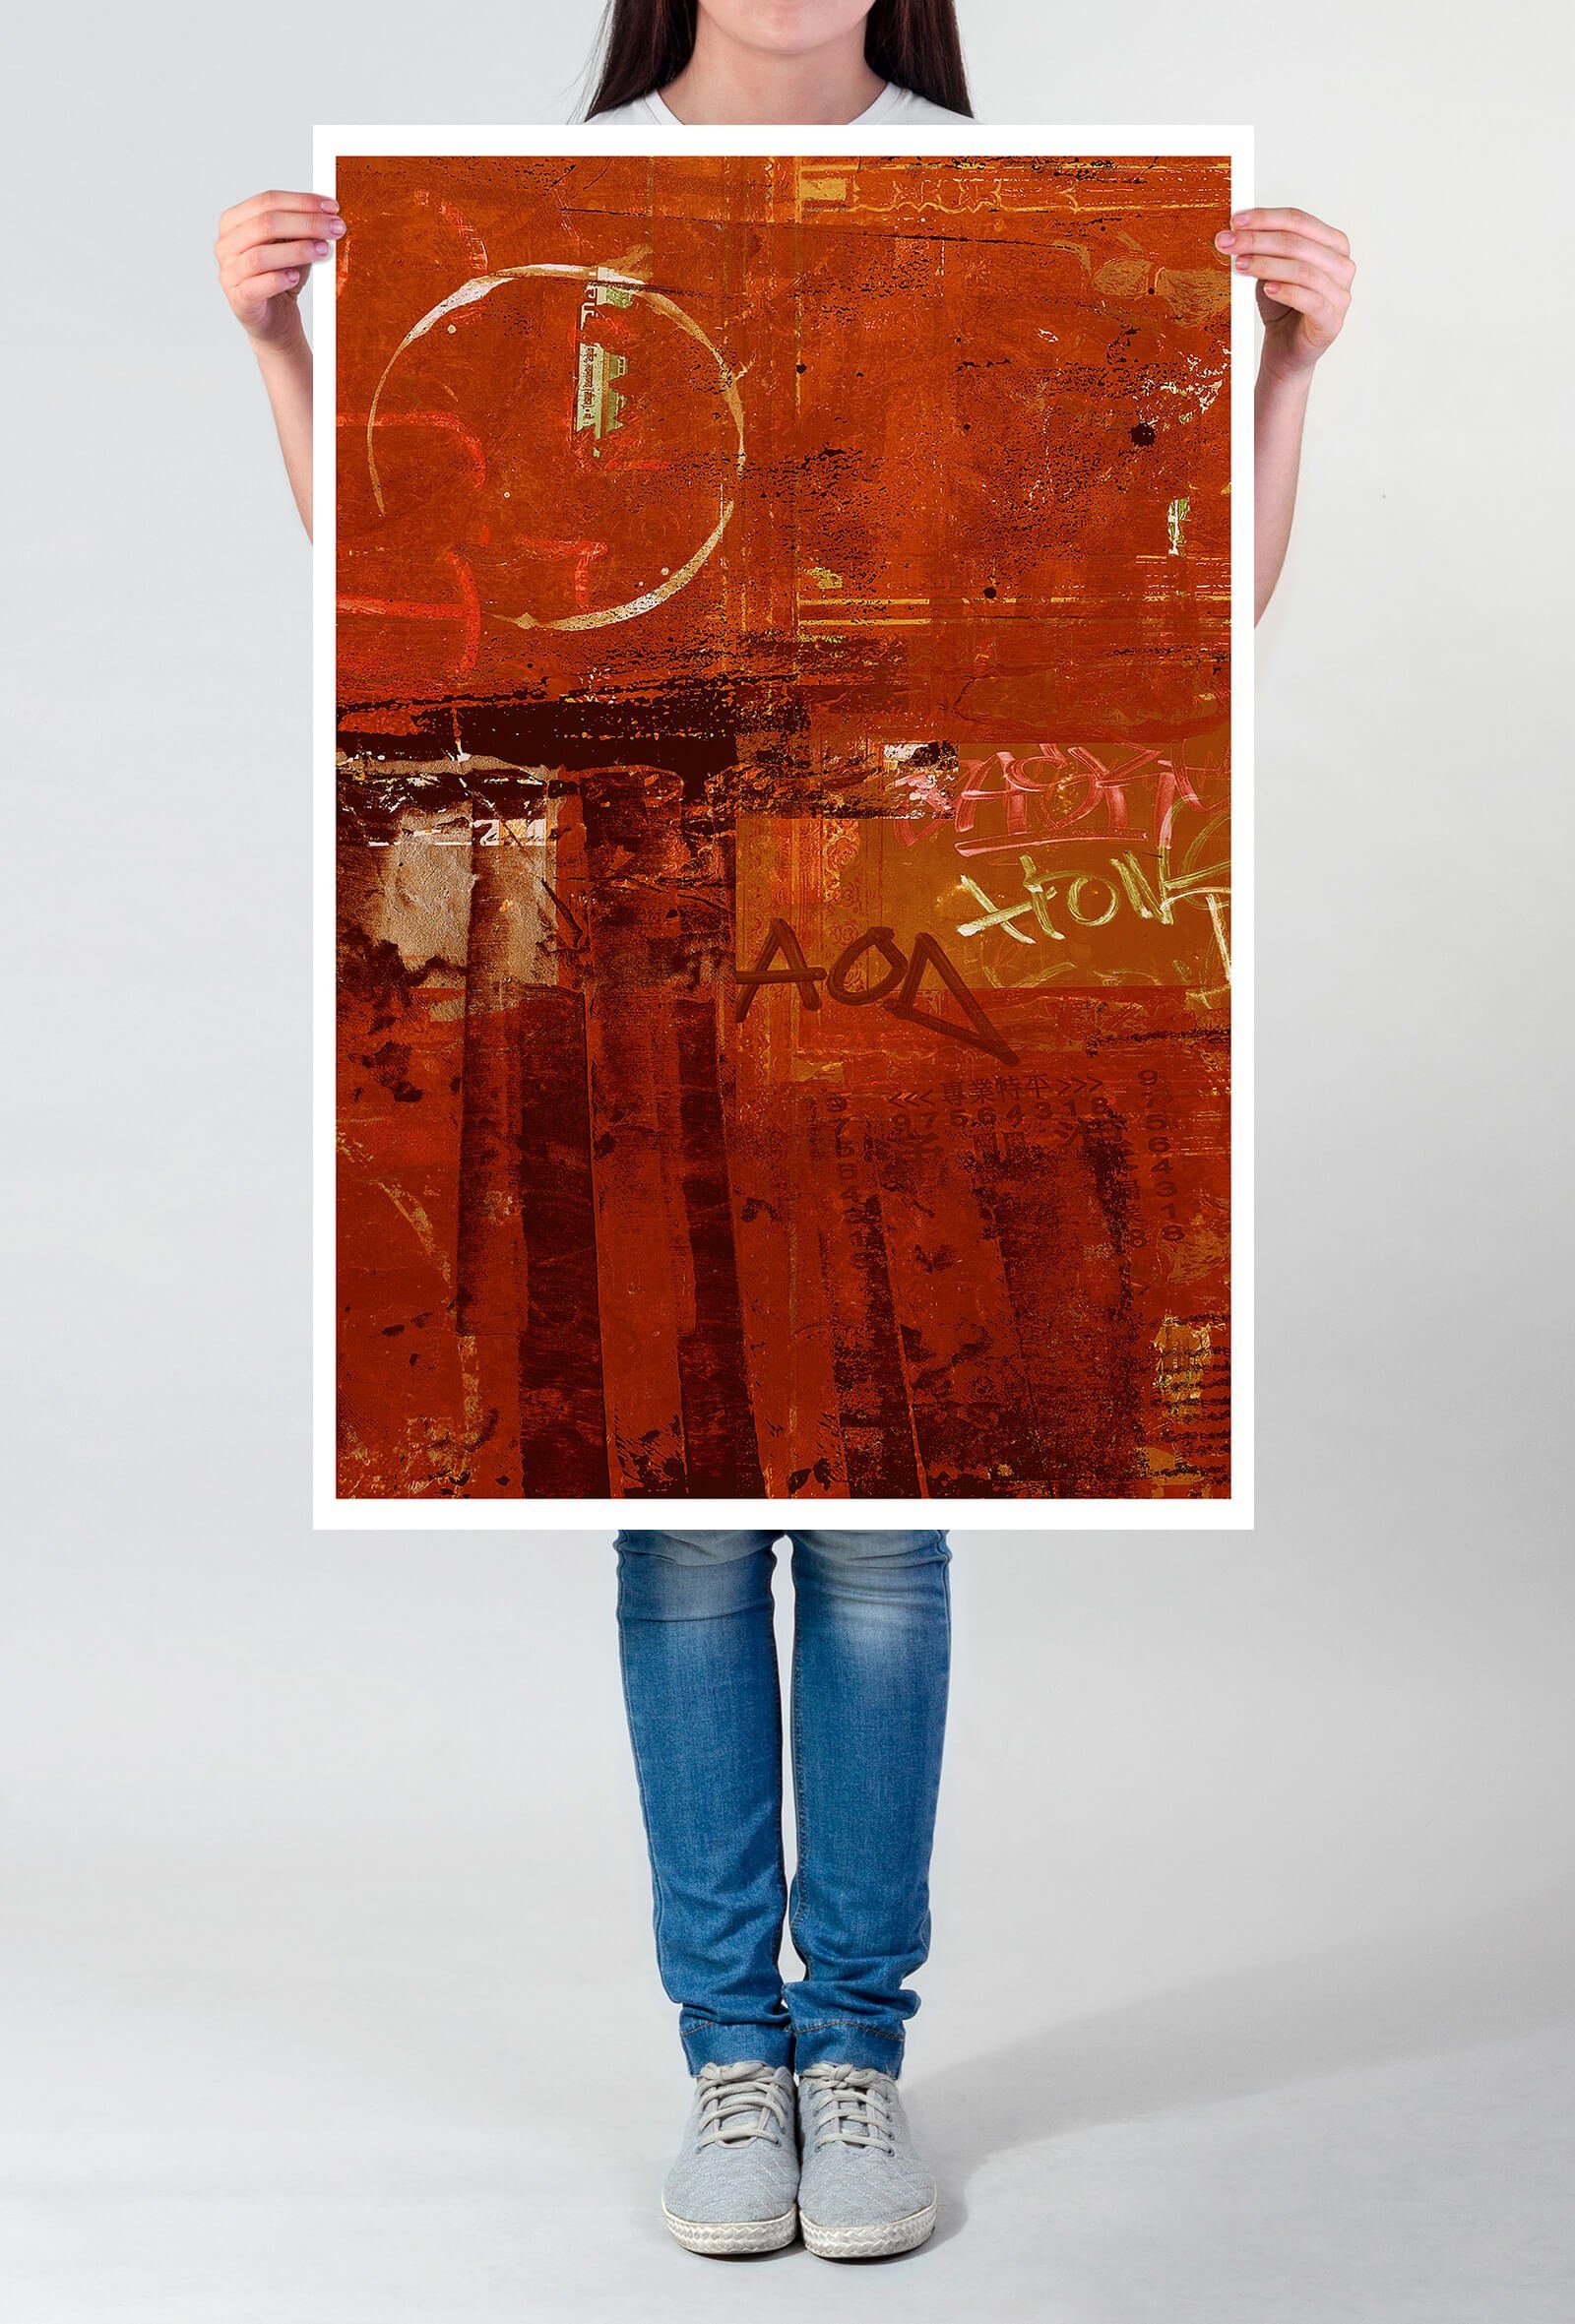 Sinus Art Poster Rocks Off - Poster 60x90cm